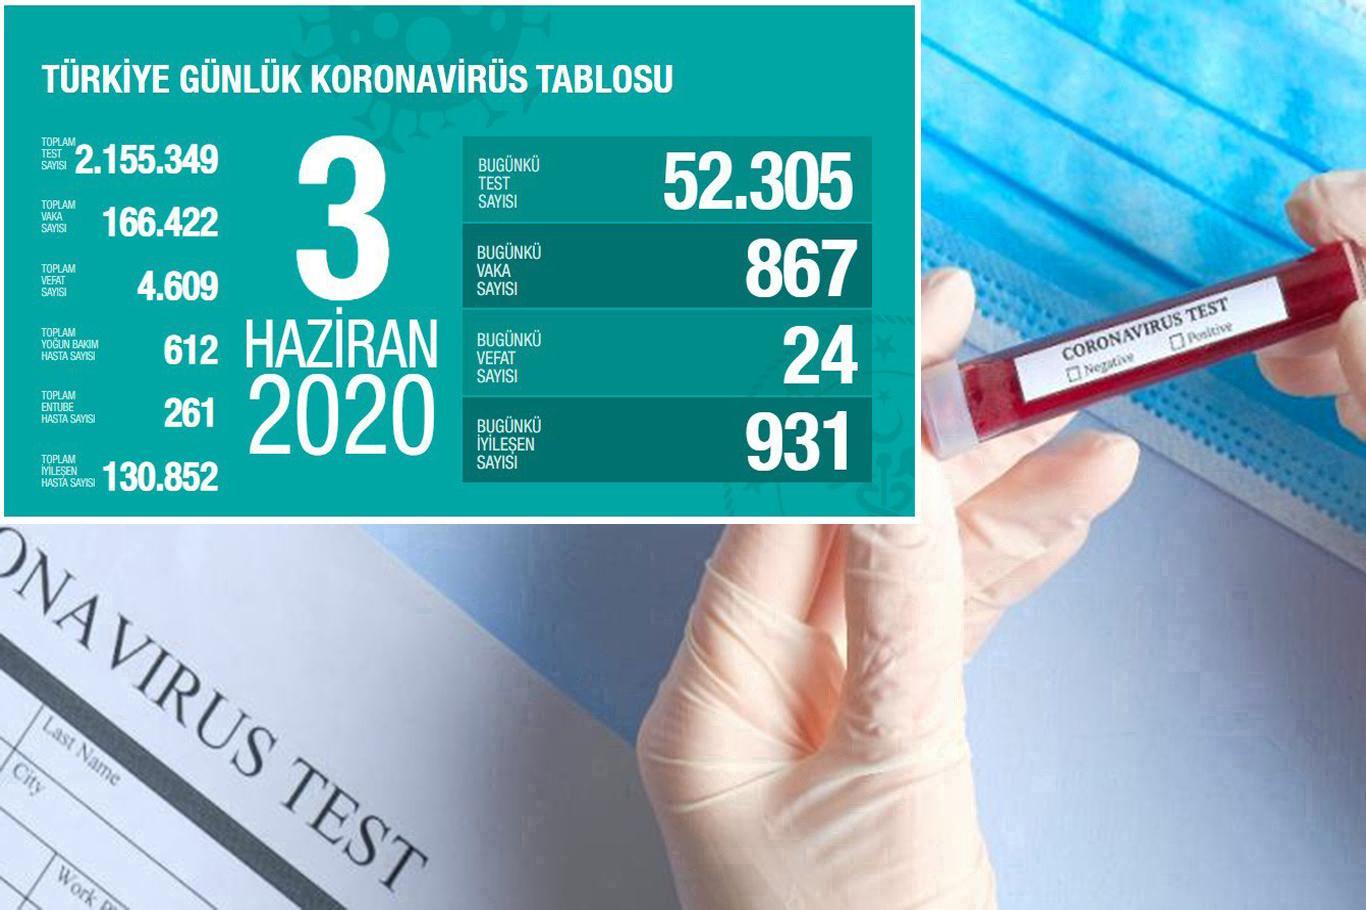 Turkey’s daily death toll from coronavirus drops to 24